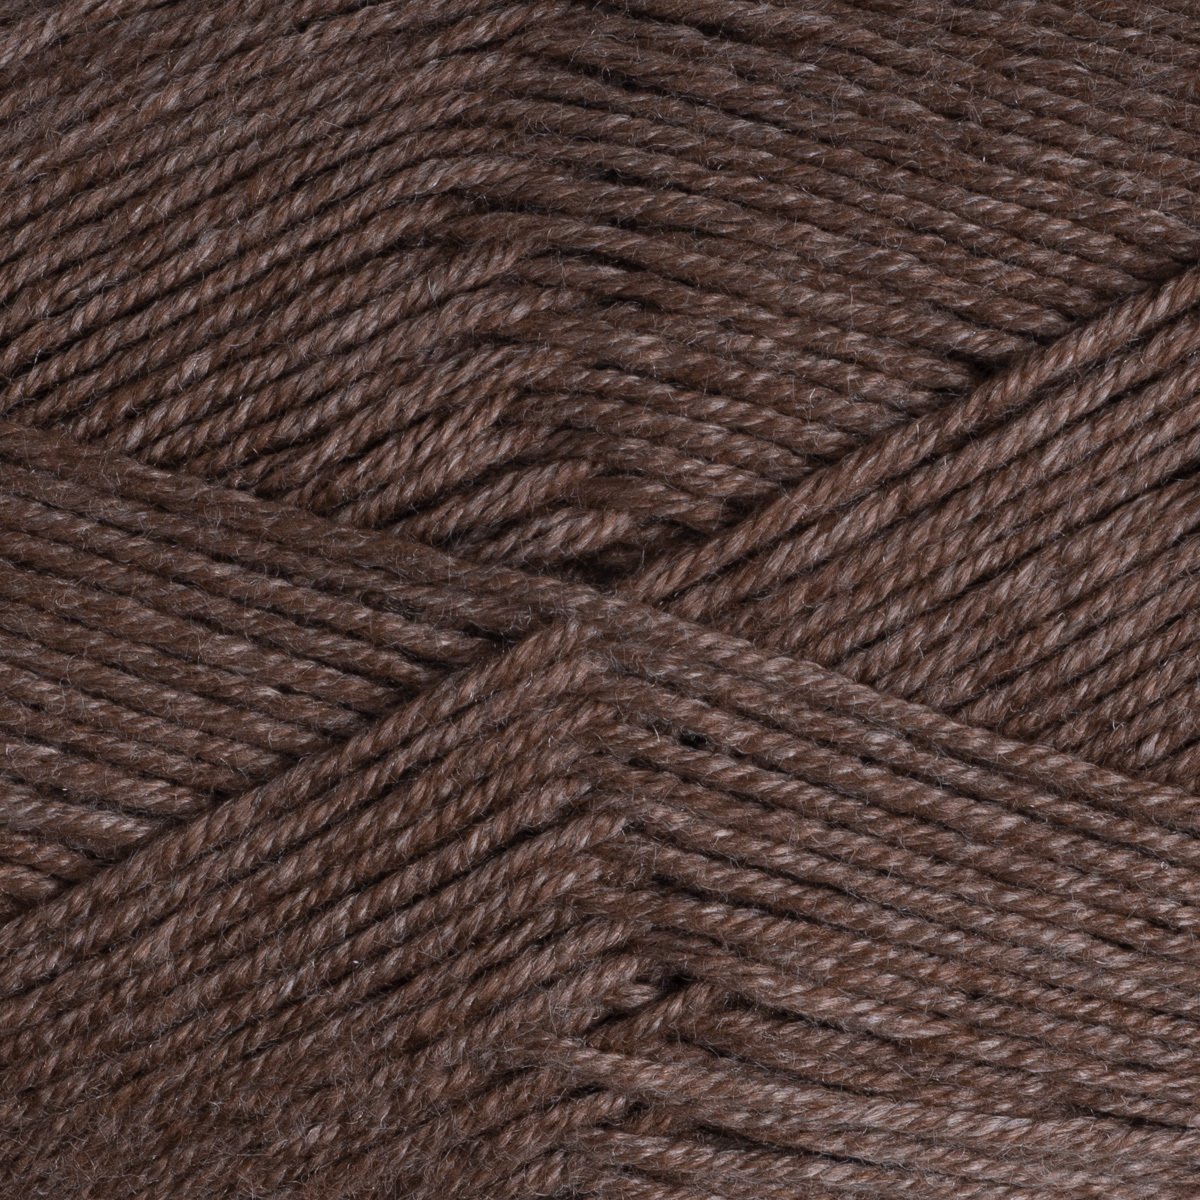 Gazzal Baby Cotton 205 (Газзал Бэби Коттон 205) 501 - коричневый